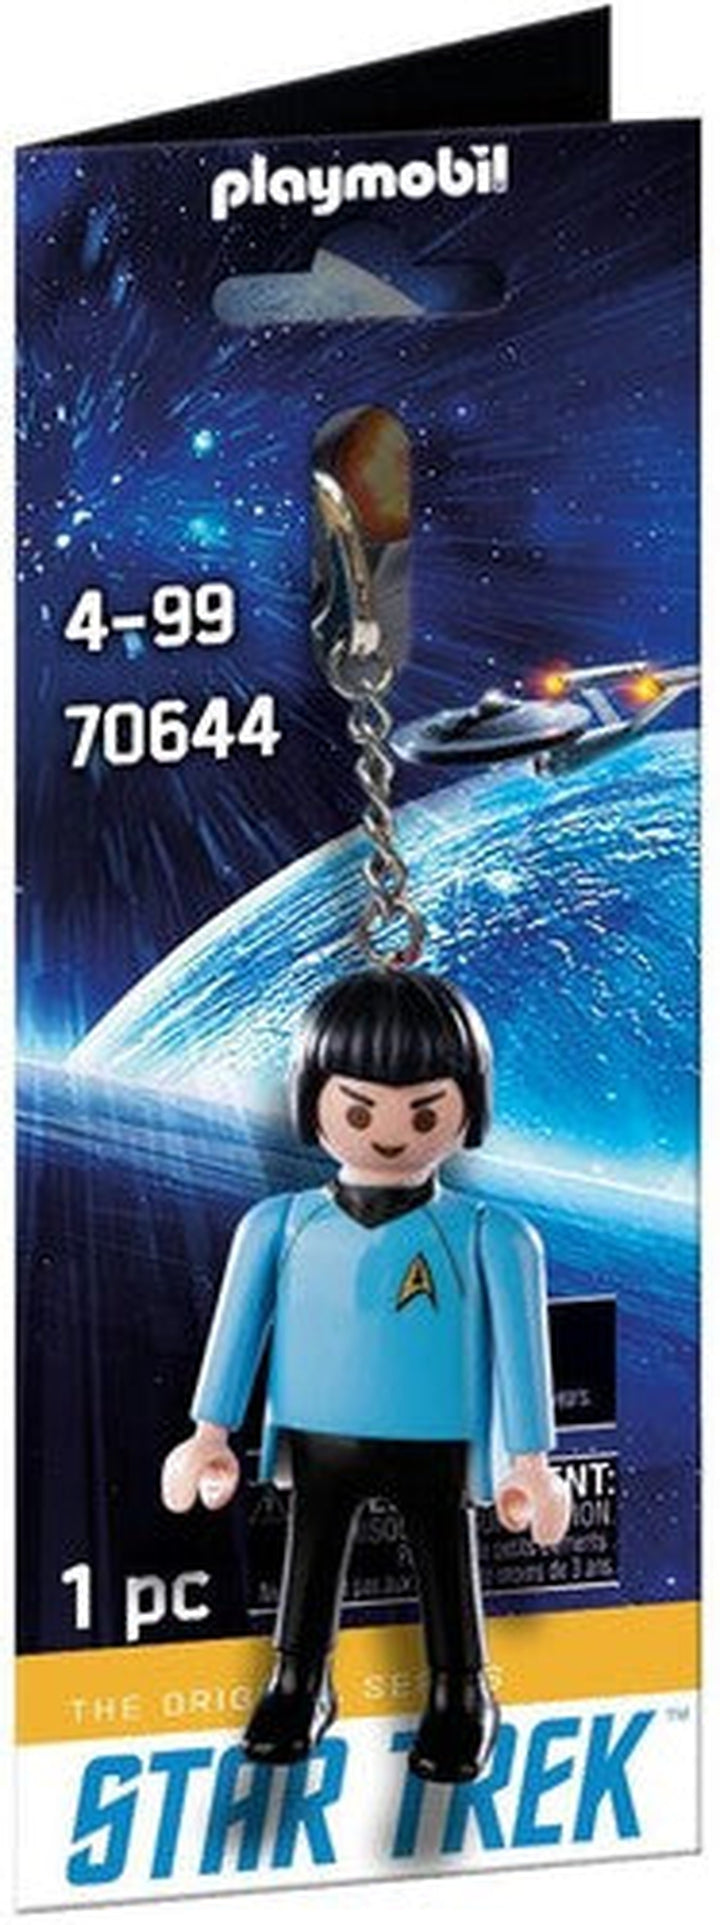 Playmobil - Star Trek Mr. Spock Keychain